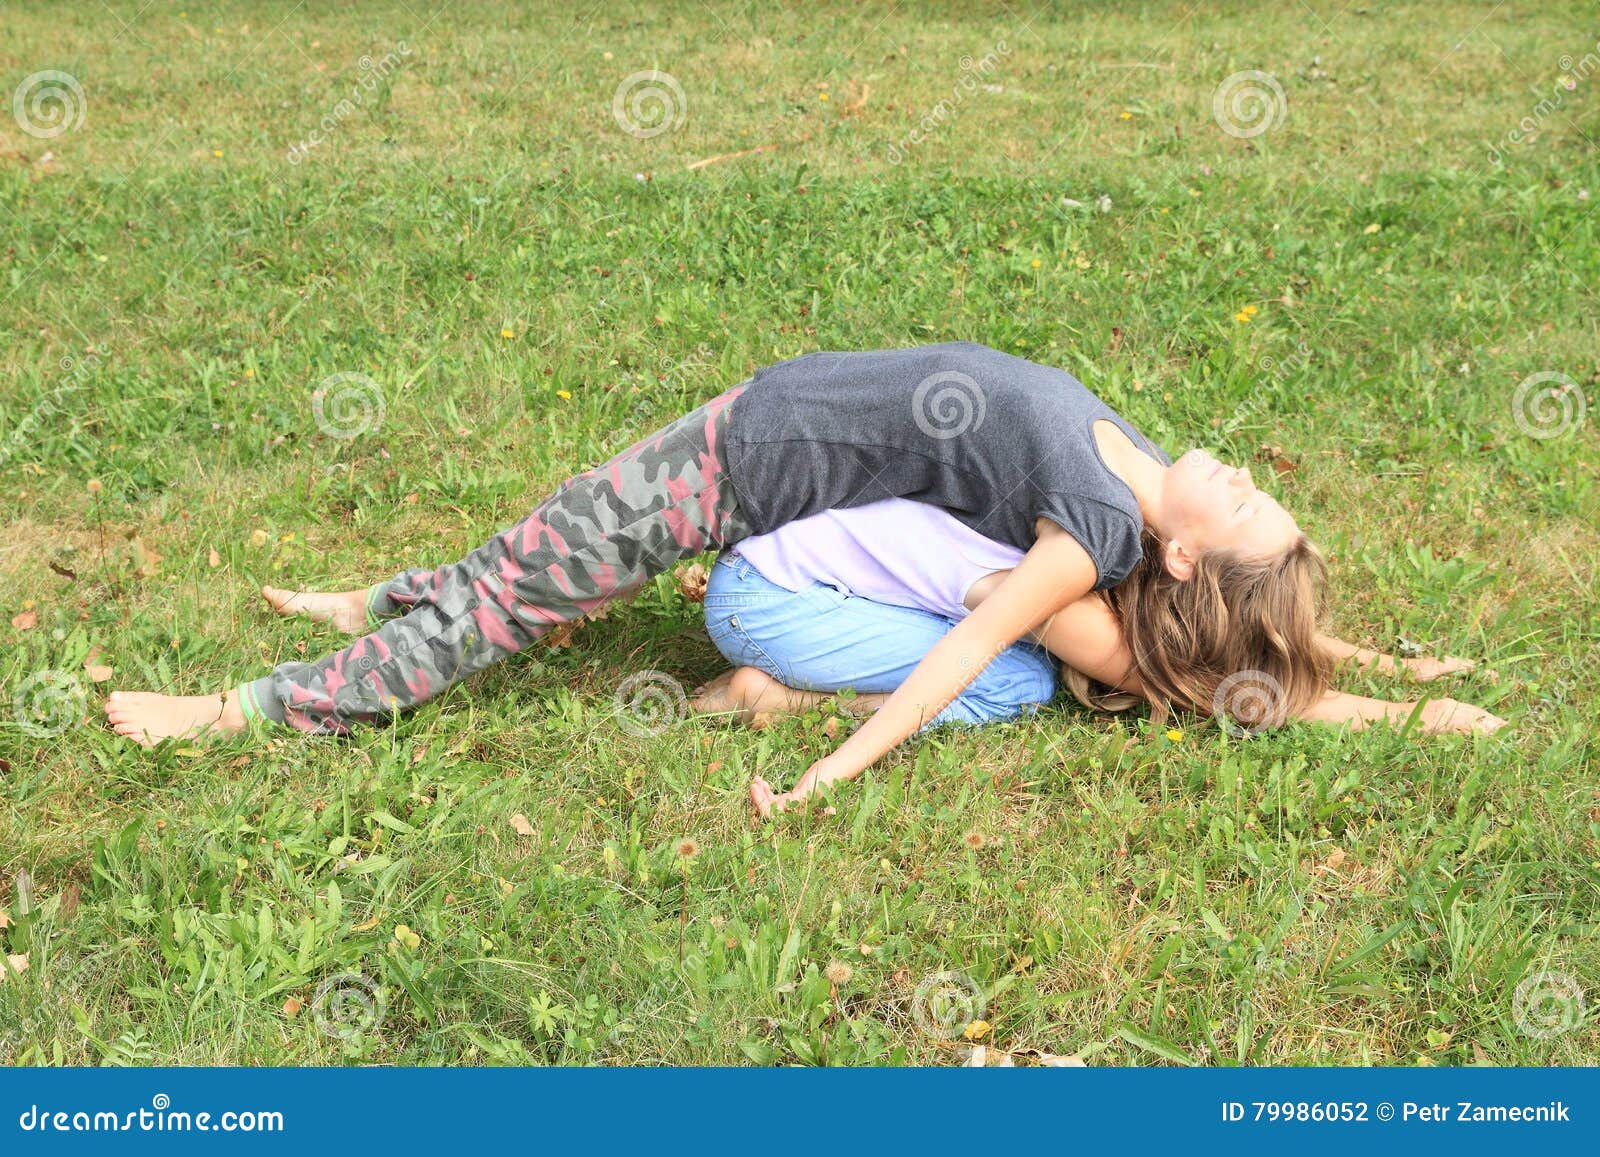 https://thumbs.dreamstime.com/z/two-girls-playing-lying-each-other-little-barefoot-kids-exercising-one-back-one-partner-yoga-child-pose-balasana-79986052.jpg